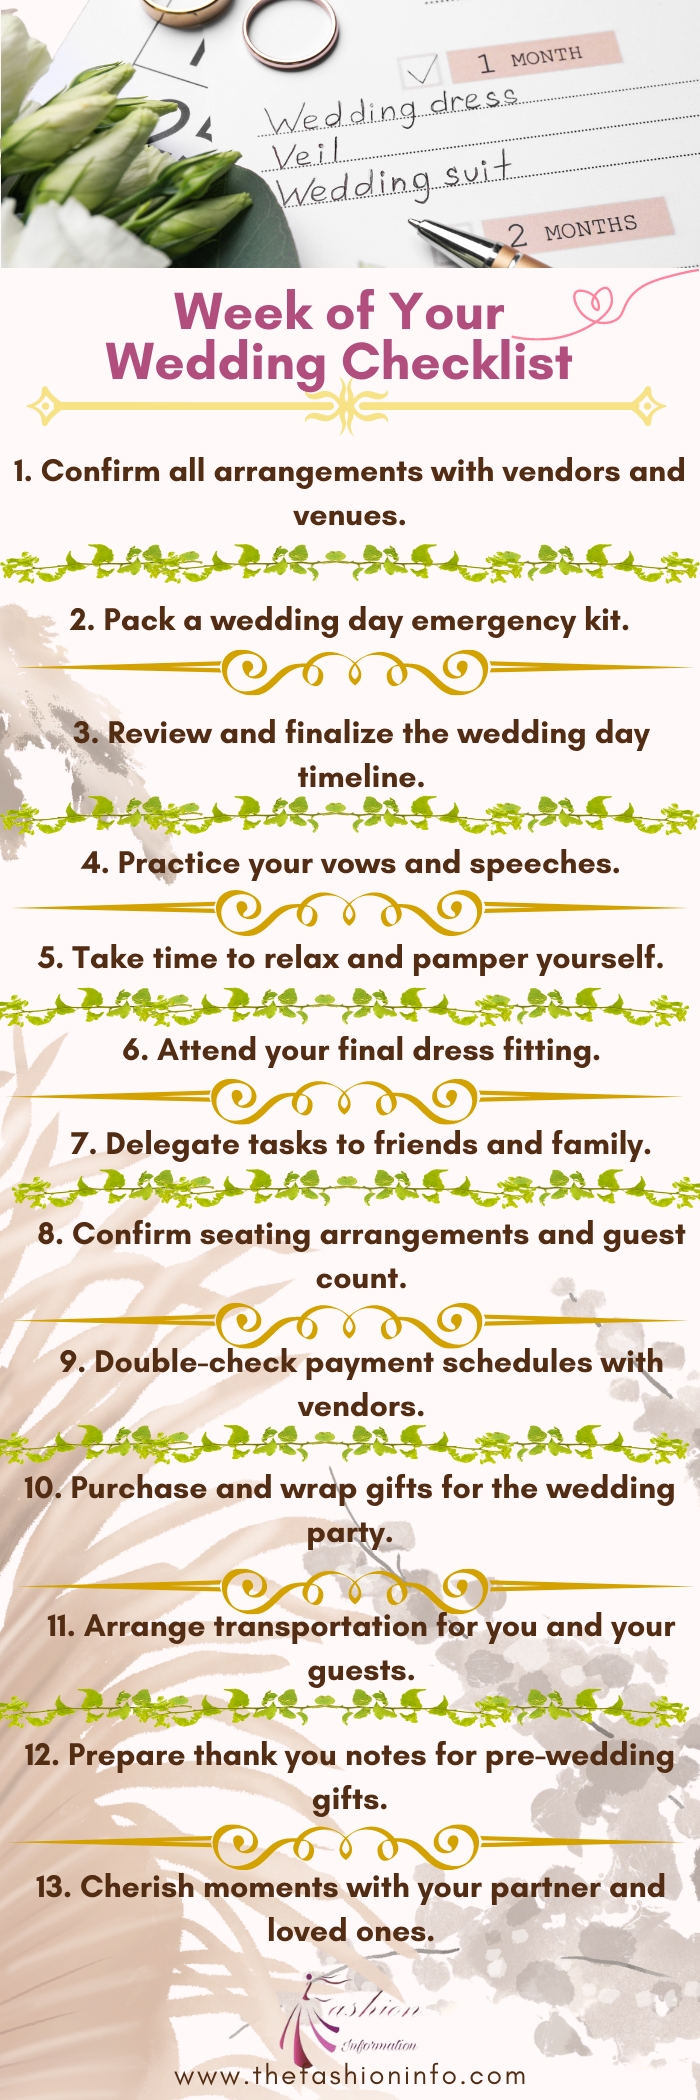 Week of Your Wedding Checklist